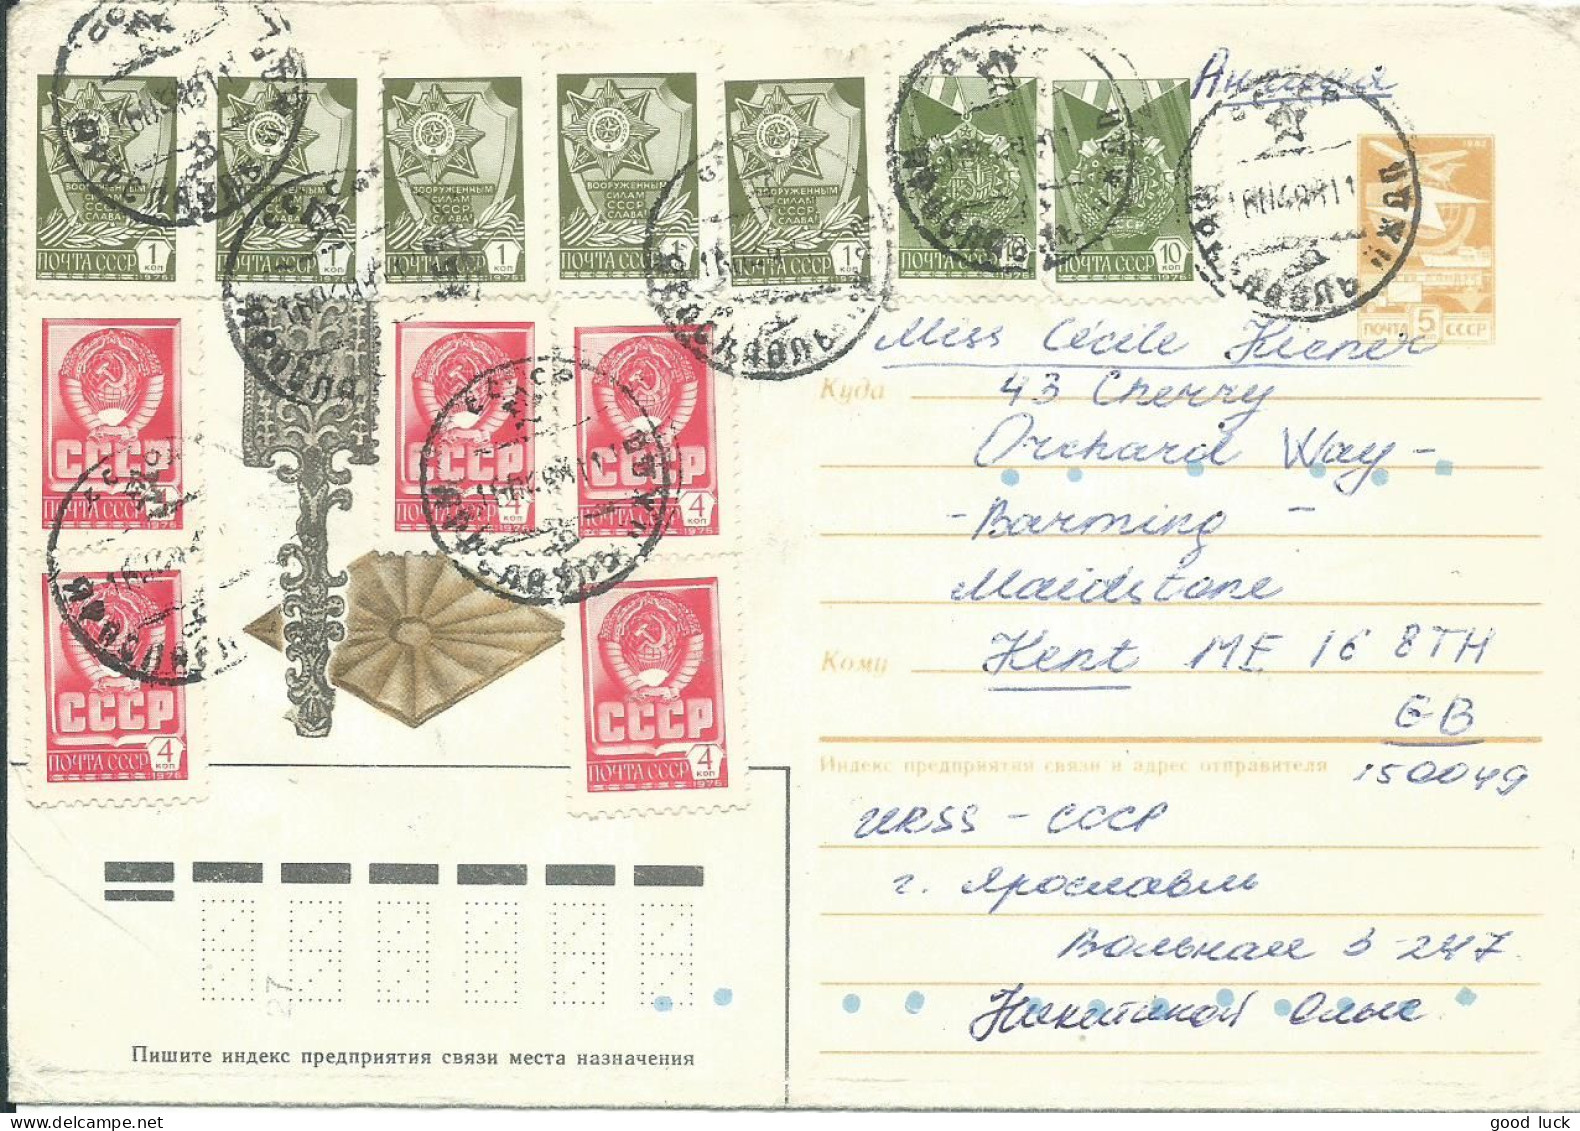 RUSSIE  LETTRE 50c POUR MAIDSTONE ( GRANDE BRETAGNE ) DE 1988 LETTRE COVER - Briefe U. Dokumente